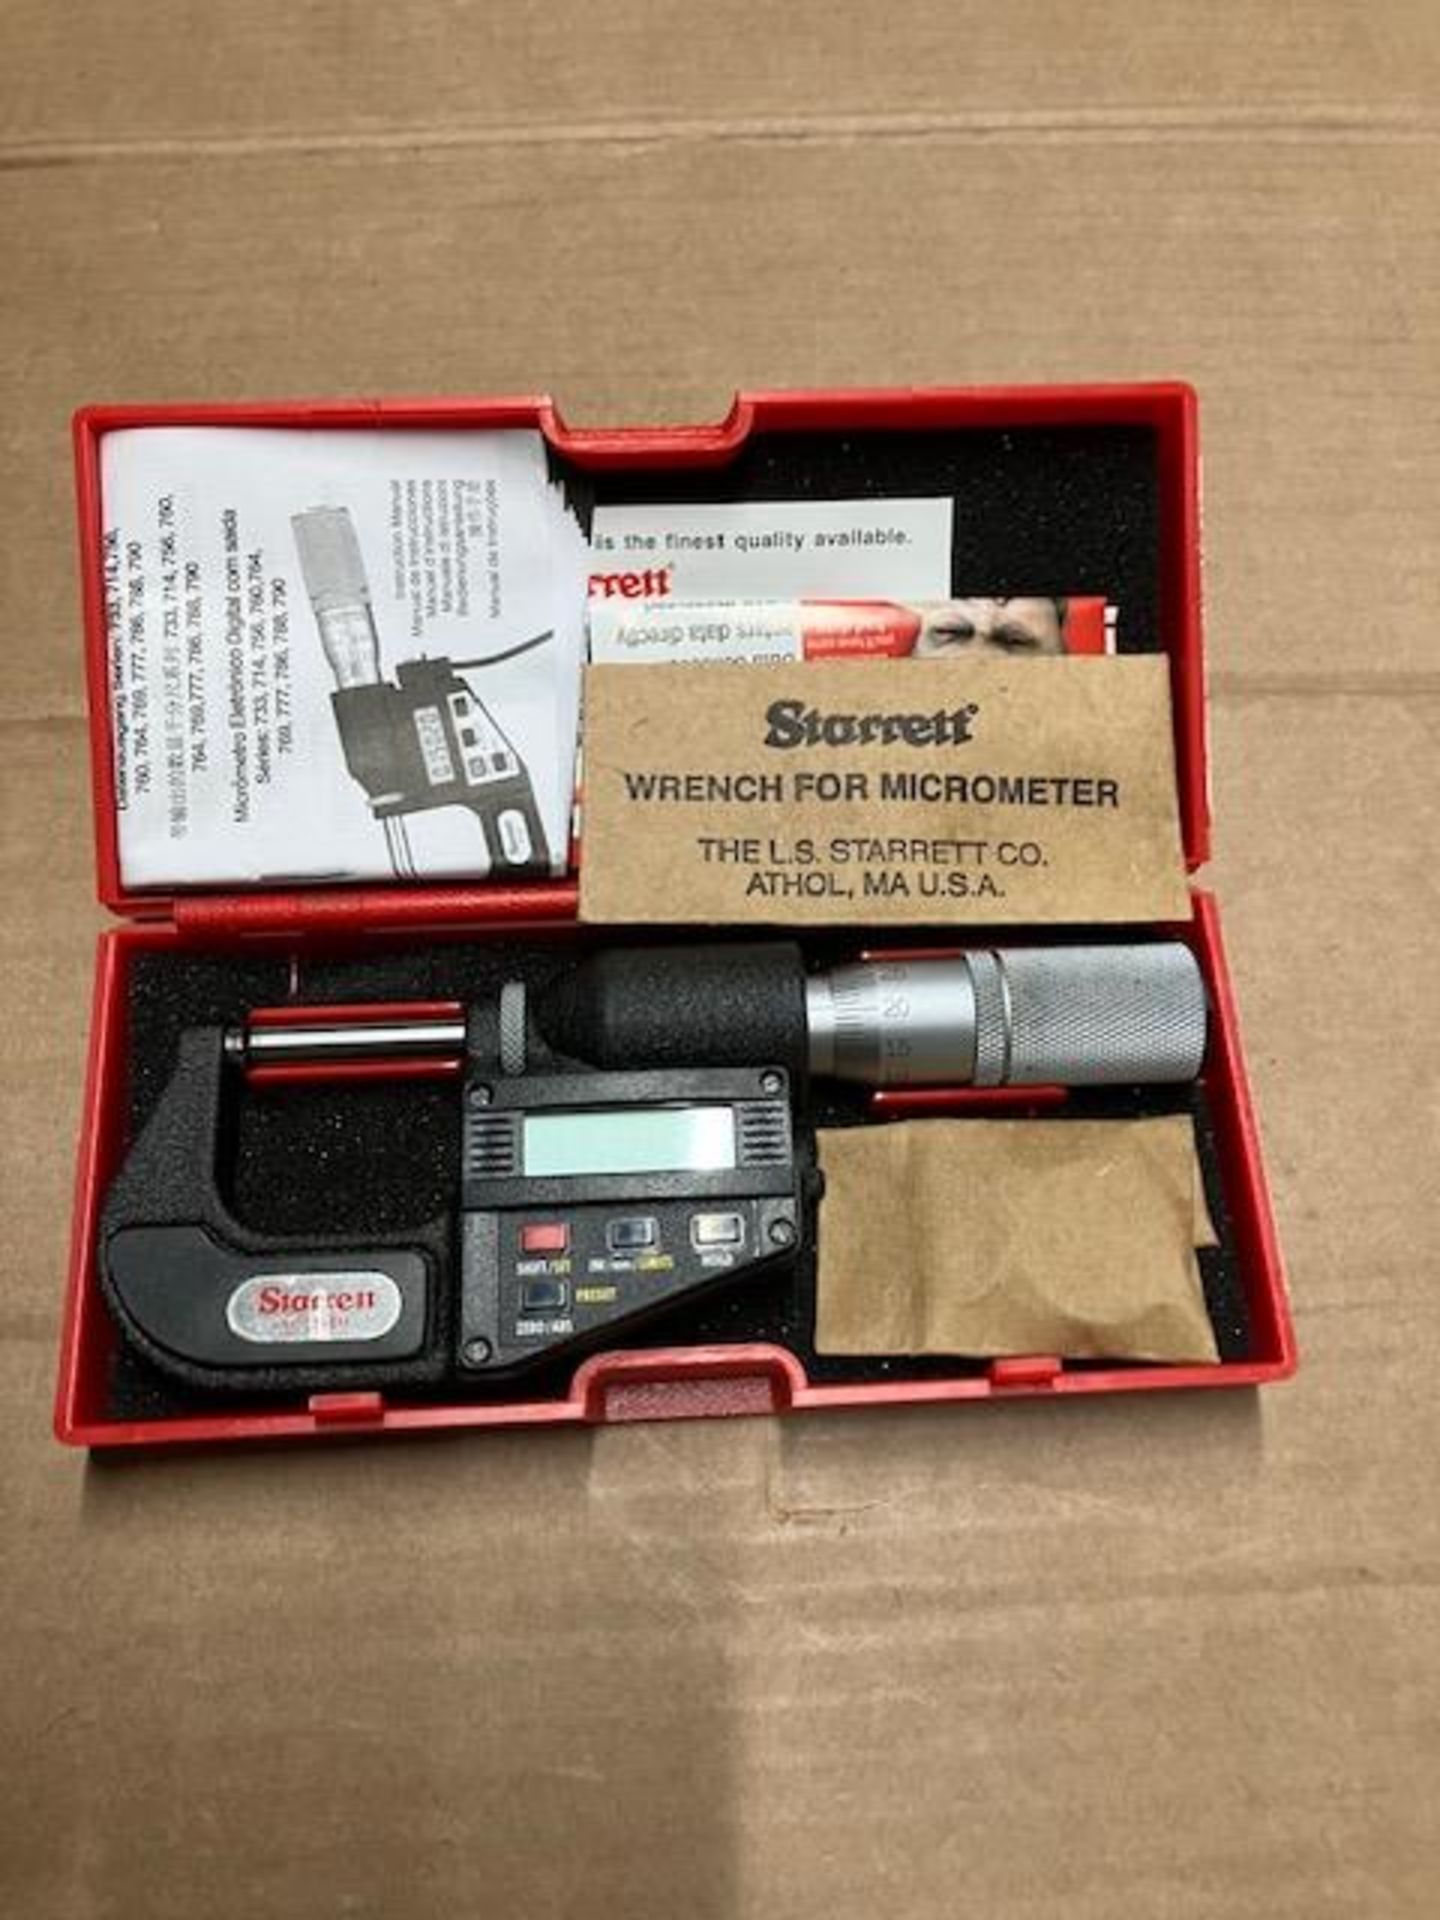 Model 788MEXFL Eletronic Micrometer. Range 0-25mm / 0-1".